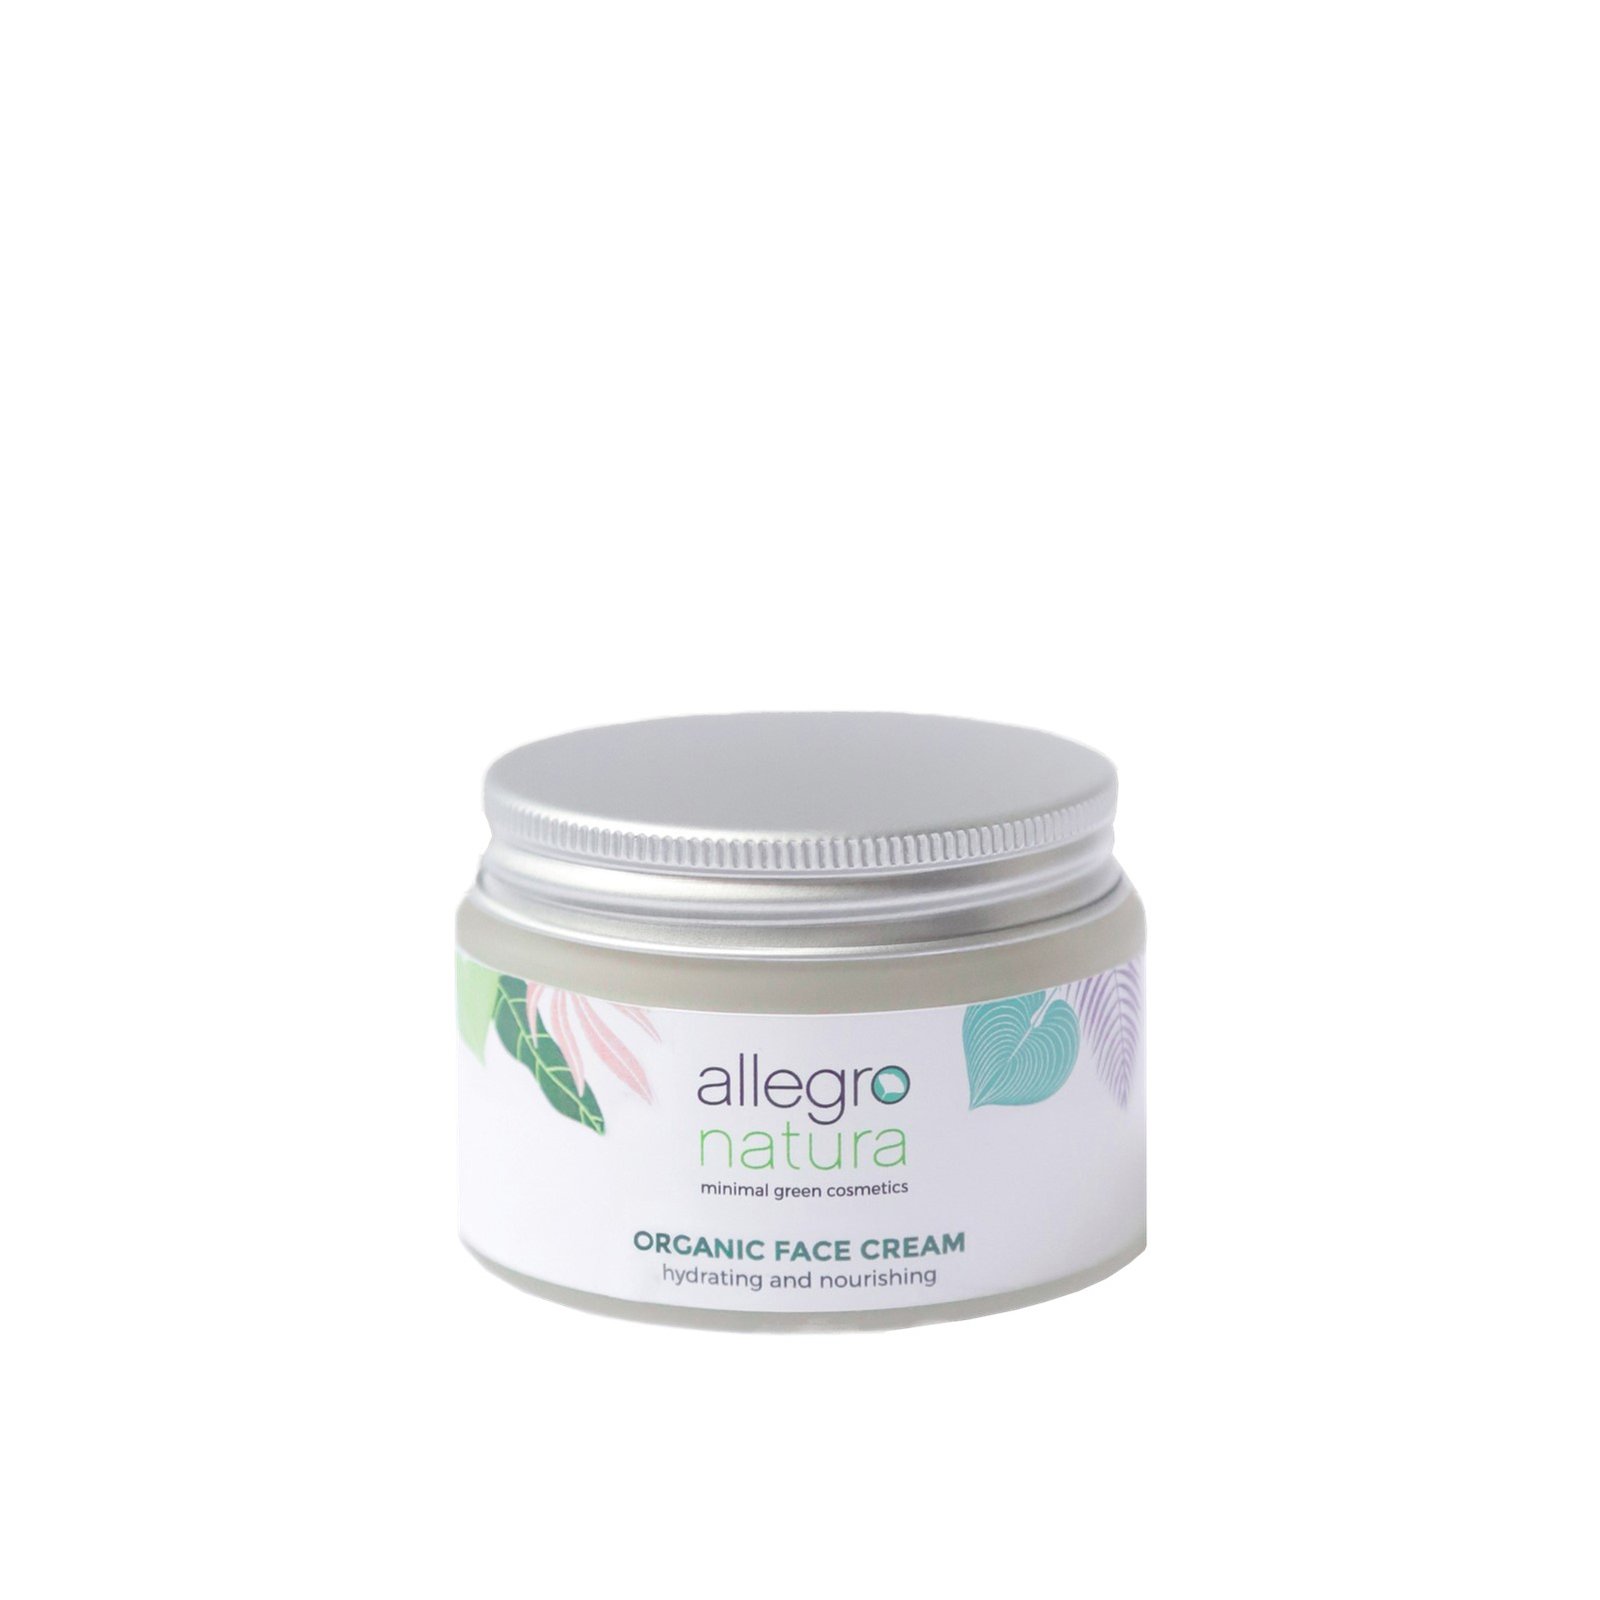 Allegro Natura Hydrating And Nourishing Organic Face Cream 50ml (1.7 fl oz)